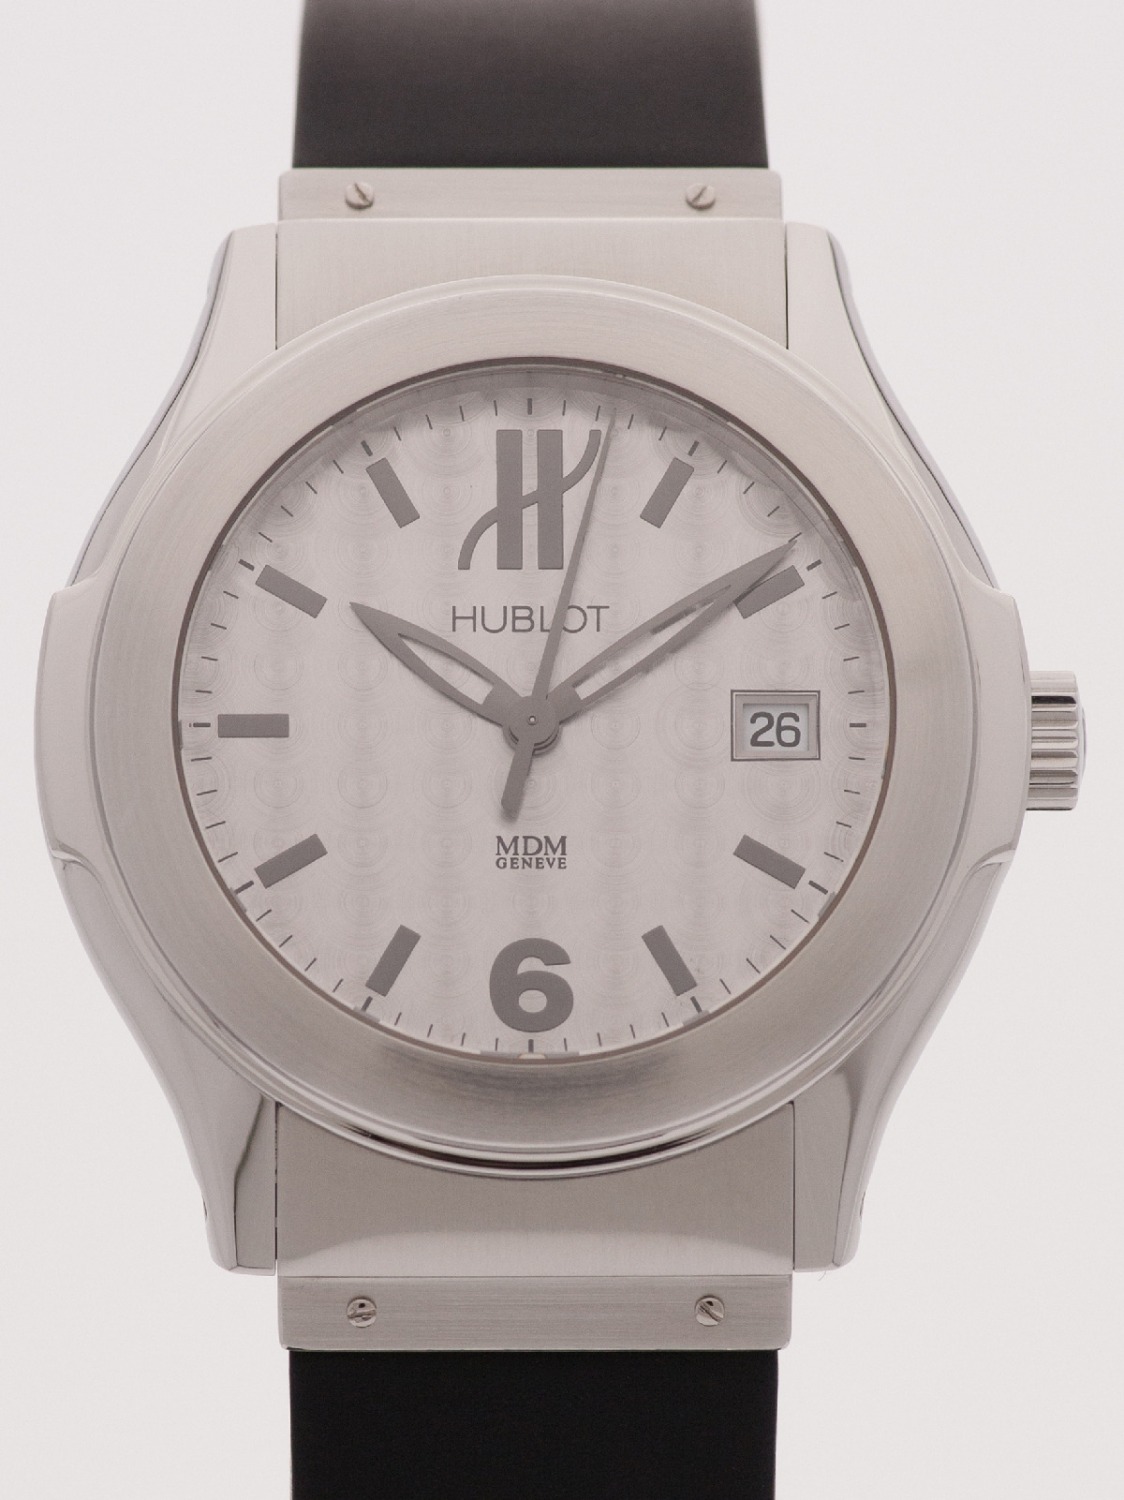 Hublot Classic MDM 42 MM watch, silver